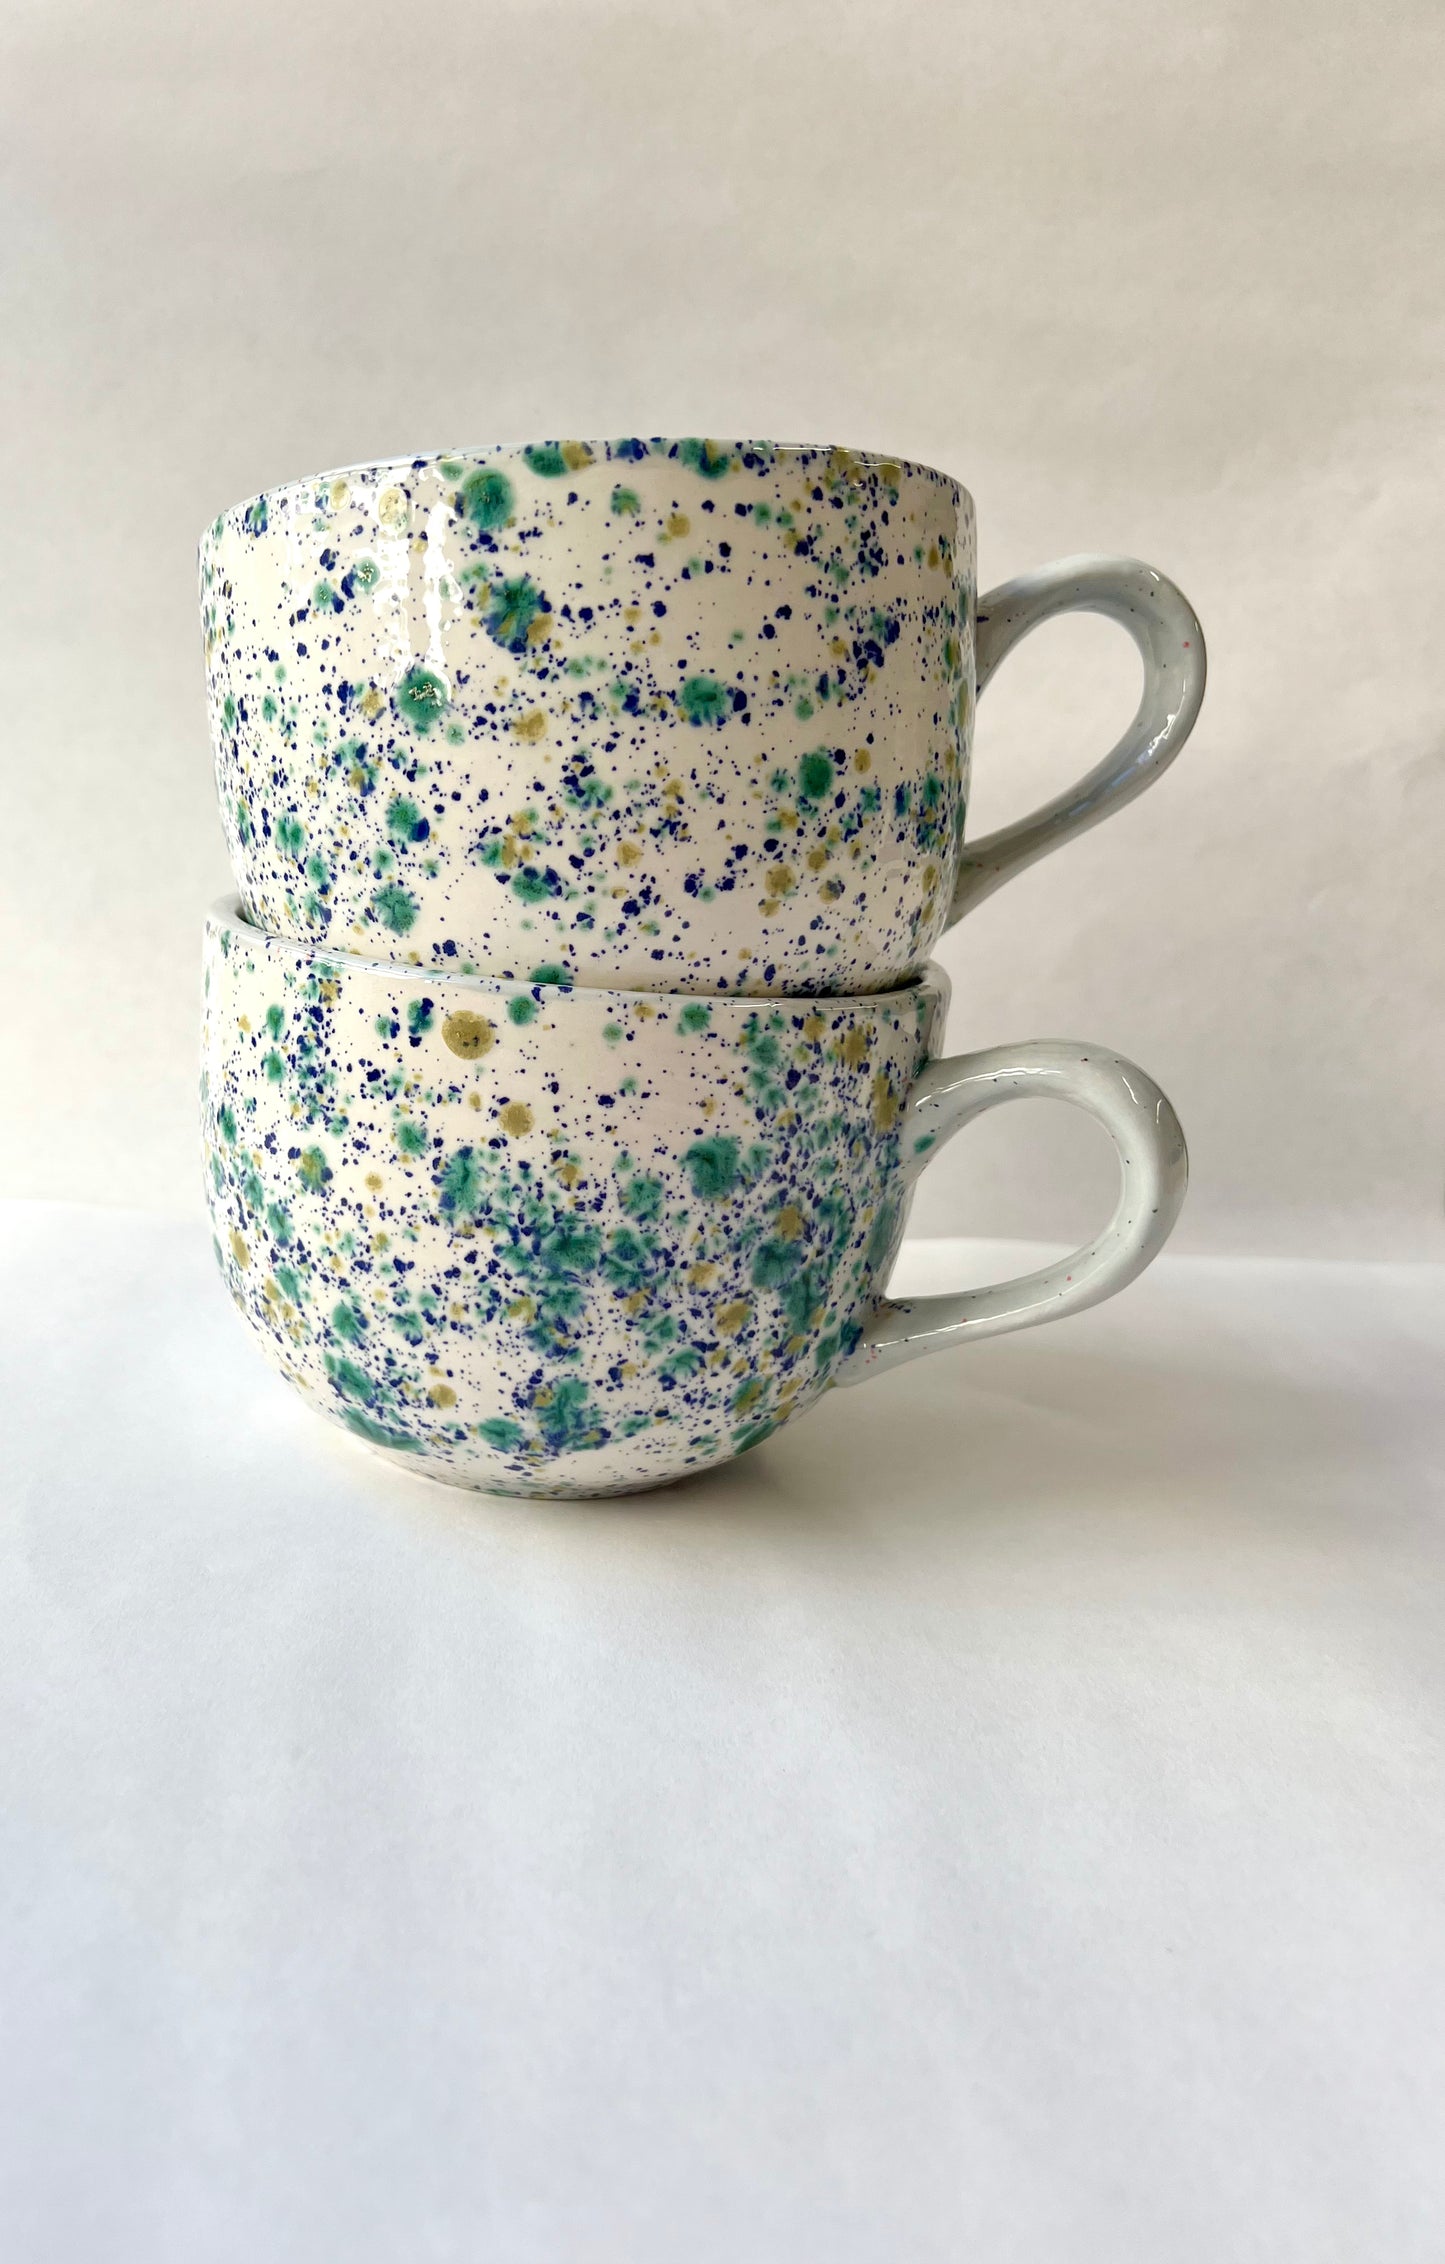 1 extra extra large seawind confetti latte mug - samples/seconds/sale pieces